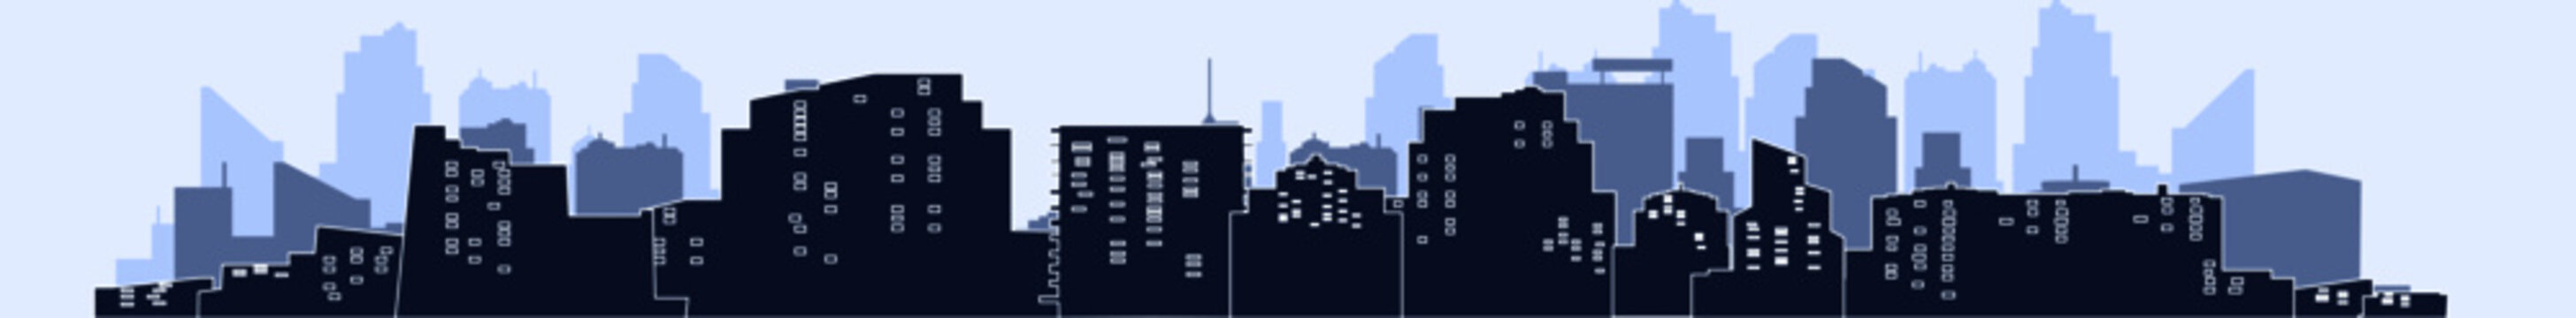 Modern City skyline vector illustration.Urban landscape.cityscape in flat style